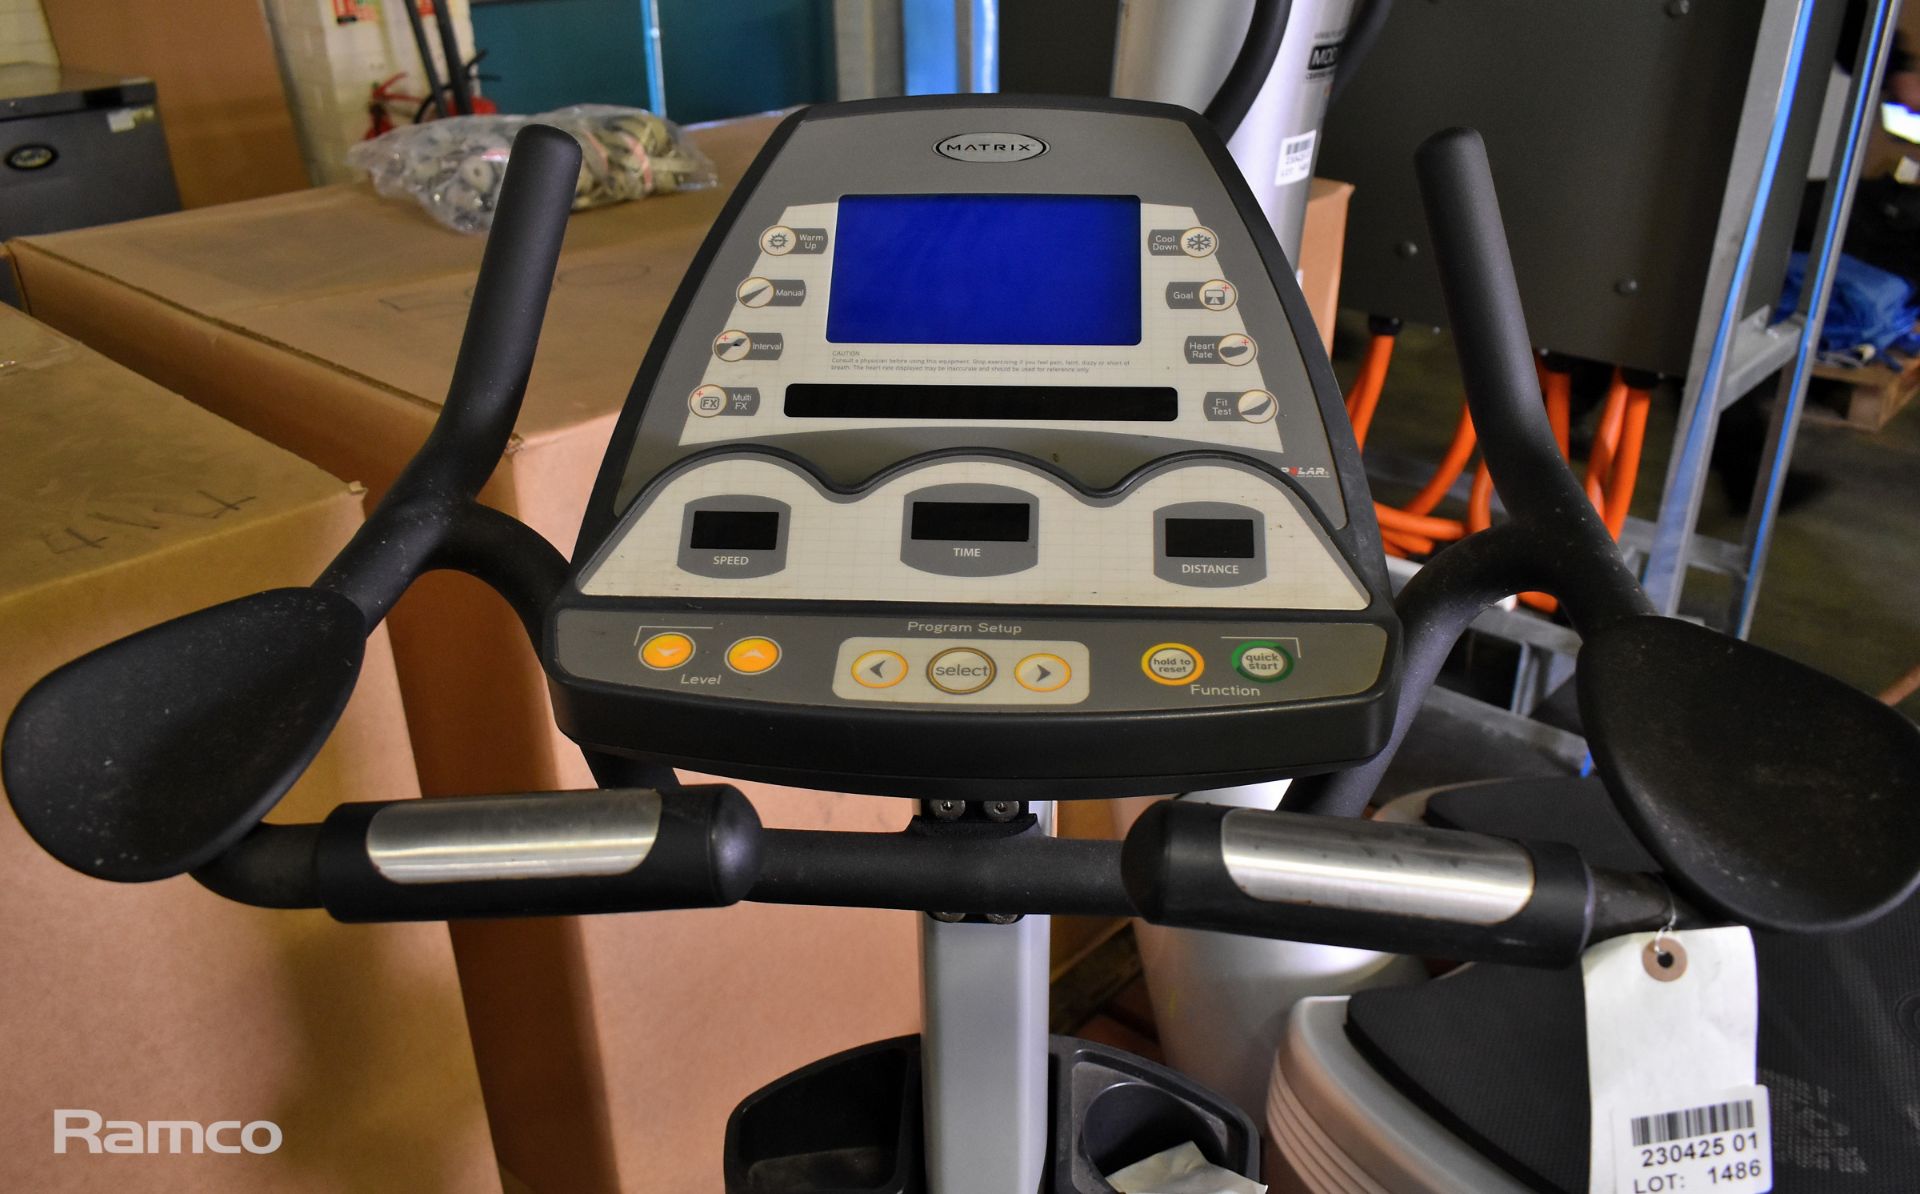 Matrix rehab exercise bike - L 93 x W 56 x H 132cm - Image 4 of 8